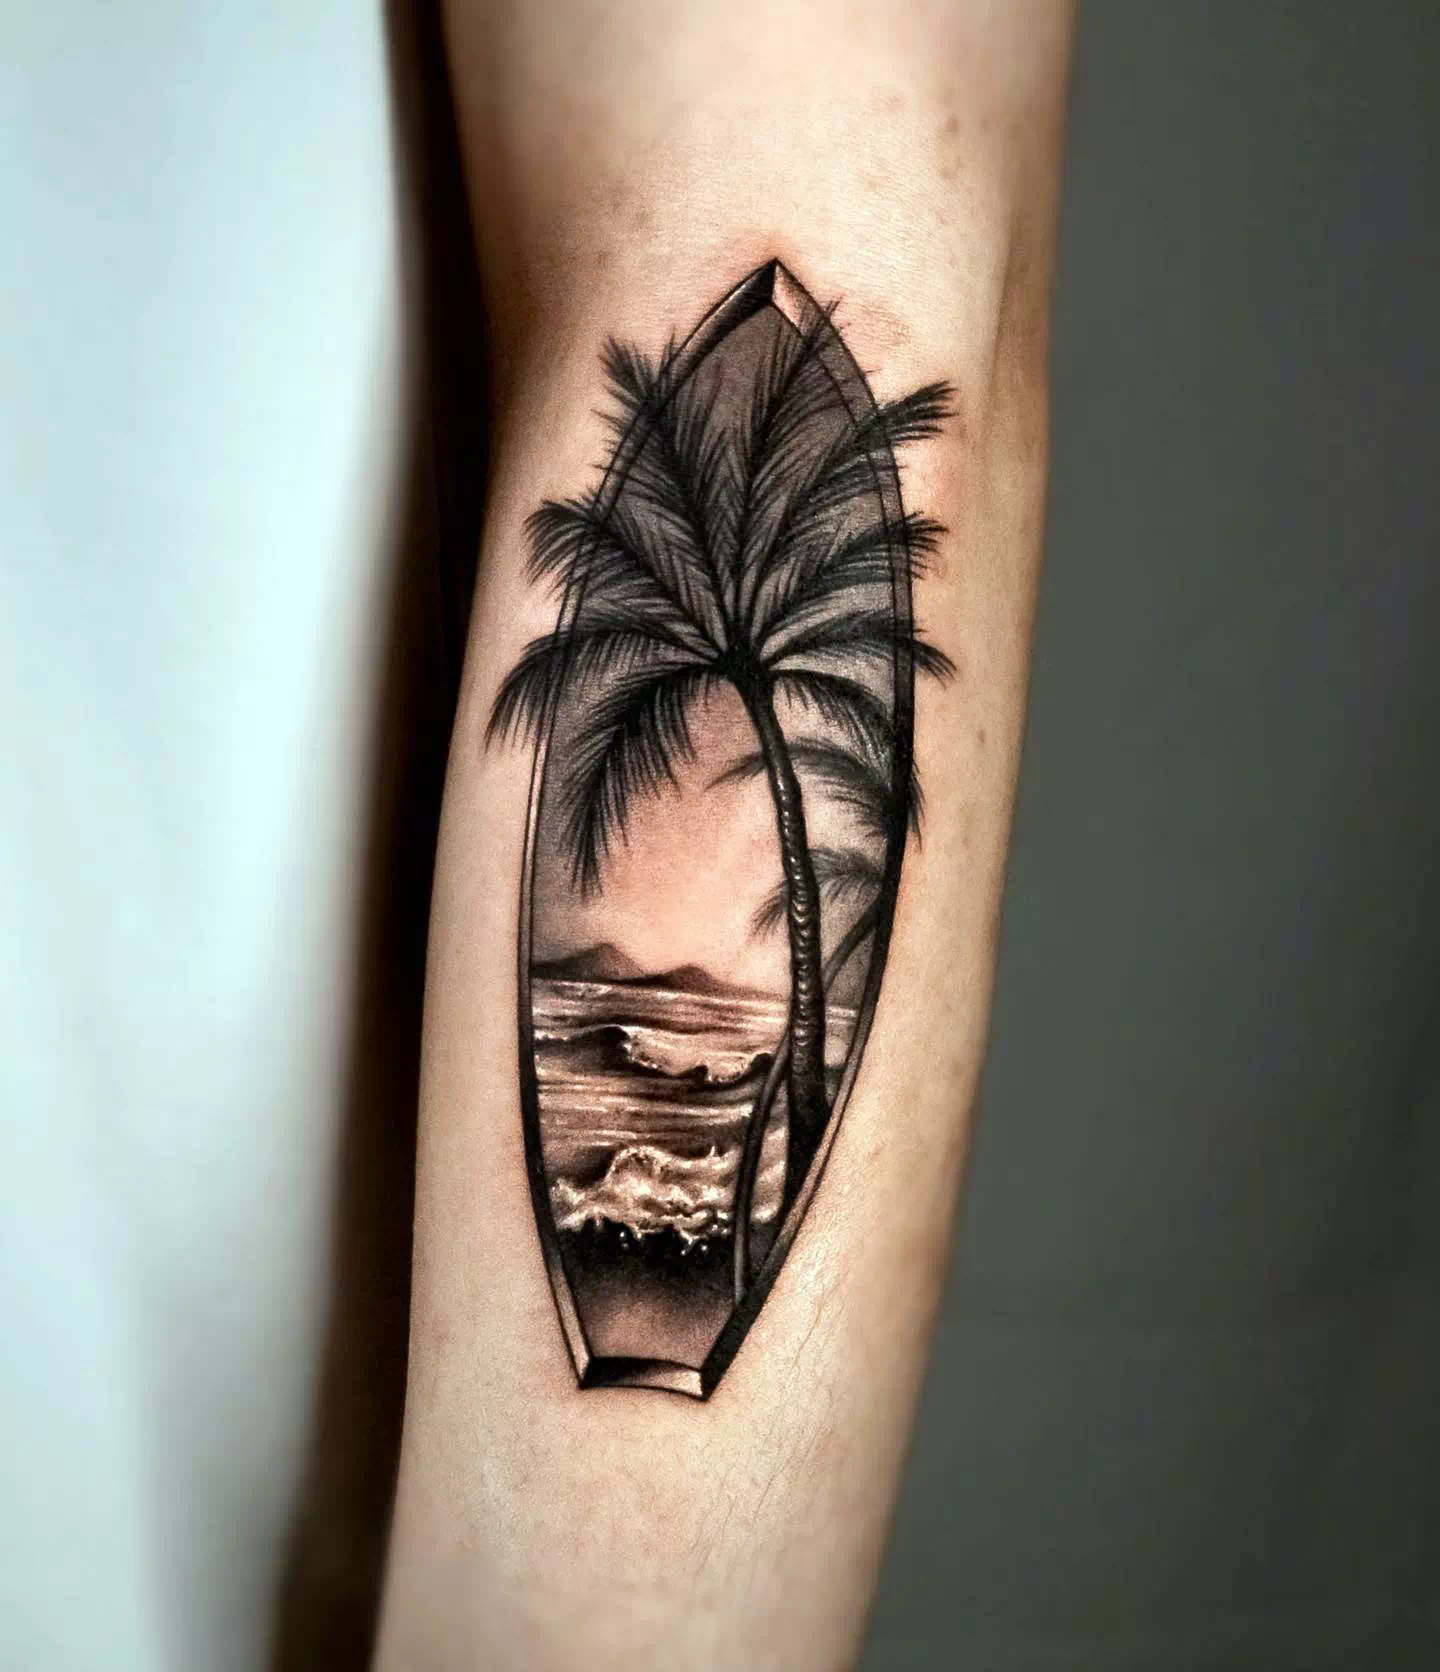 Tatuaje de una palmera en el antebrazo 3